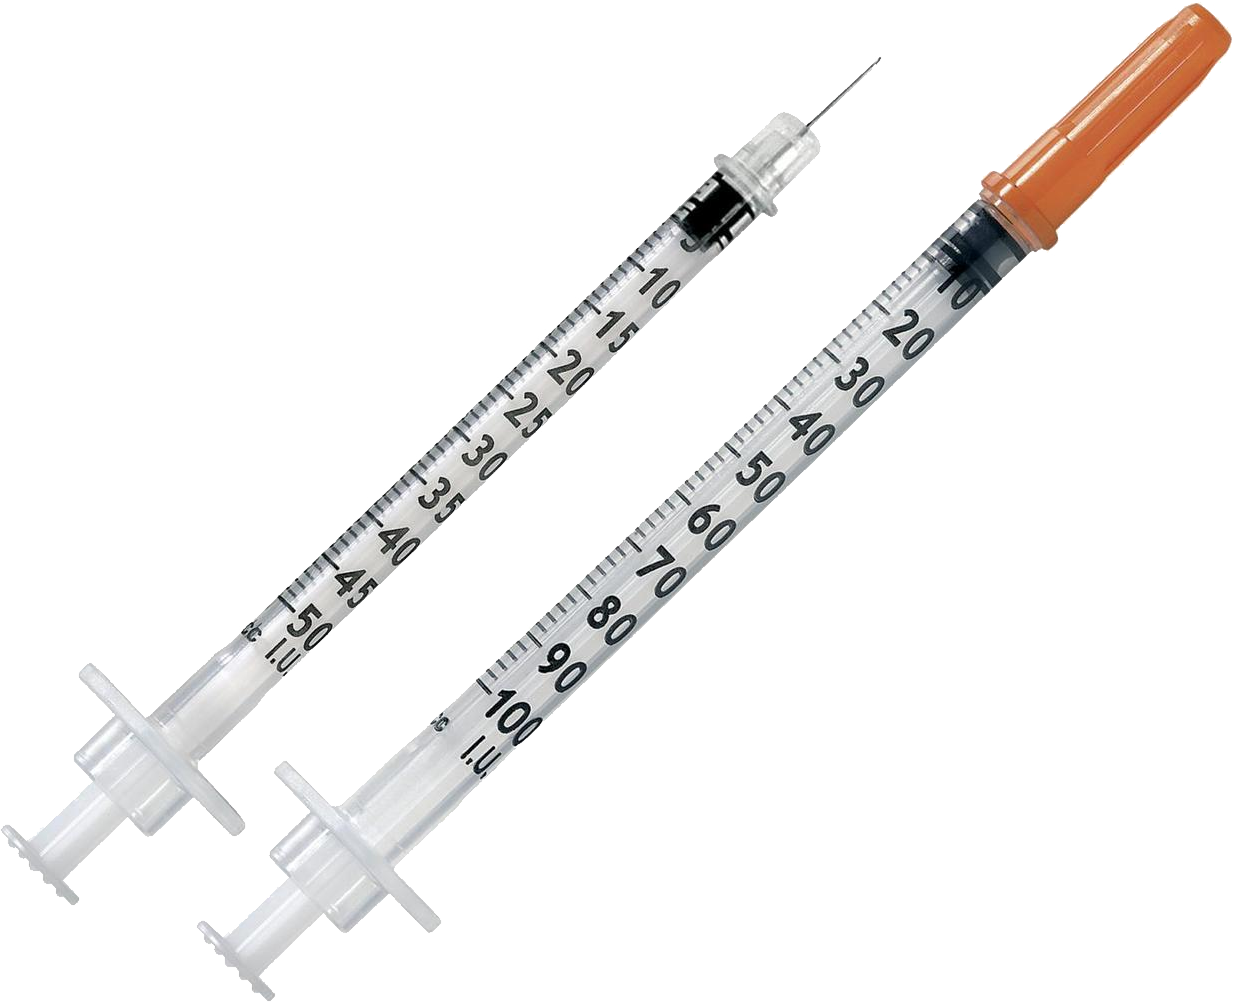 Syringe Needle Download PNG Image